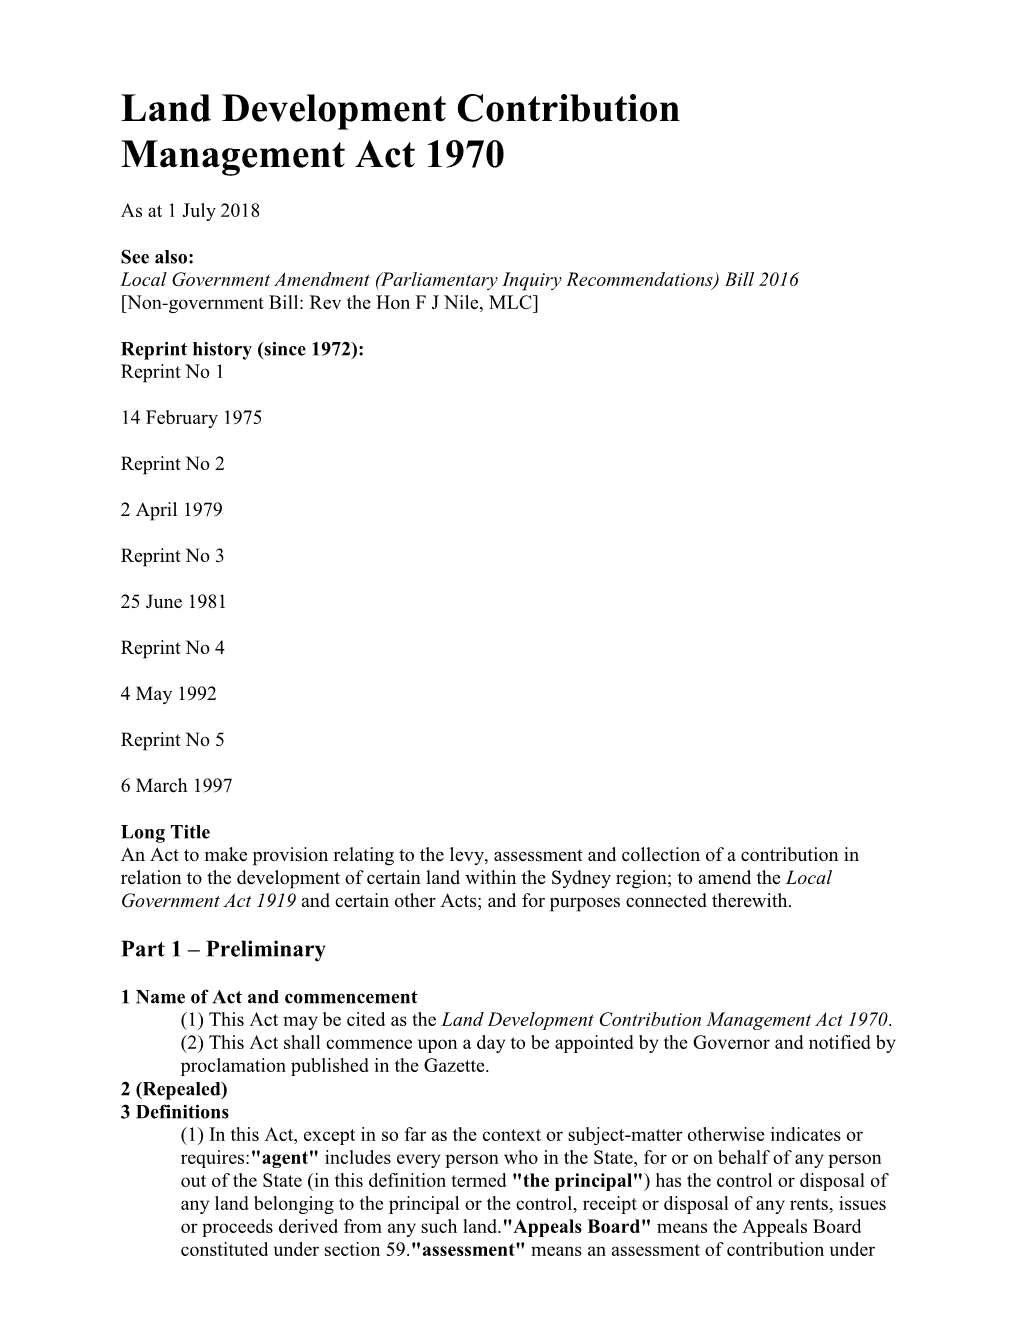 Land Development Contribution Management Act 1970